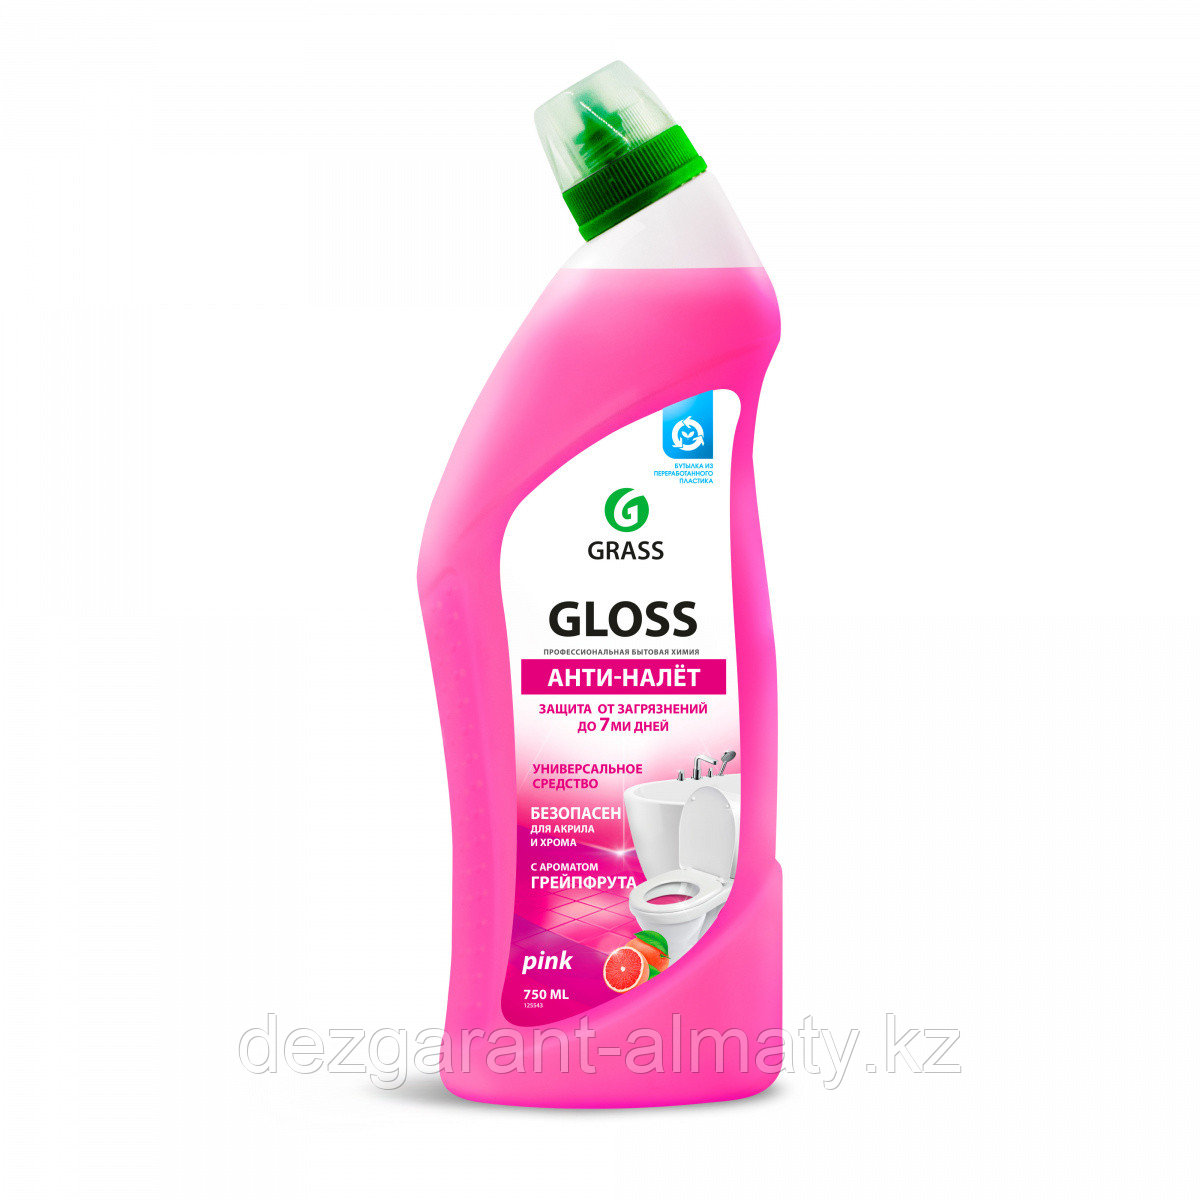 Gloss Pink чистящий гель для ванны и туалета Грейпфрут 750 мл